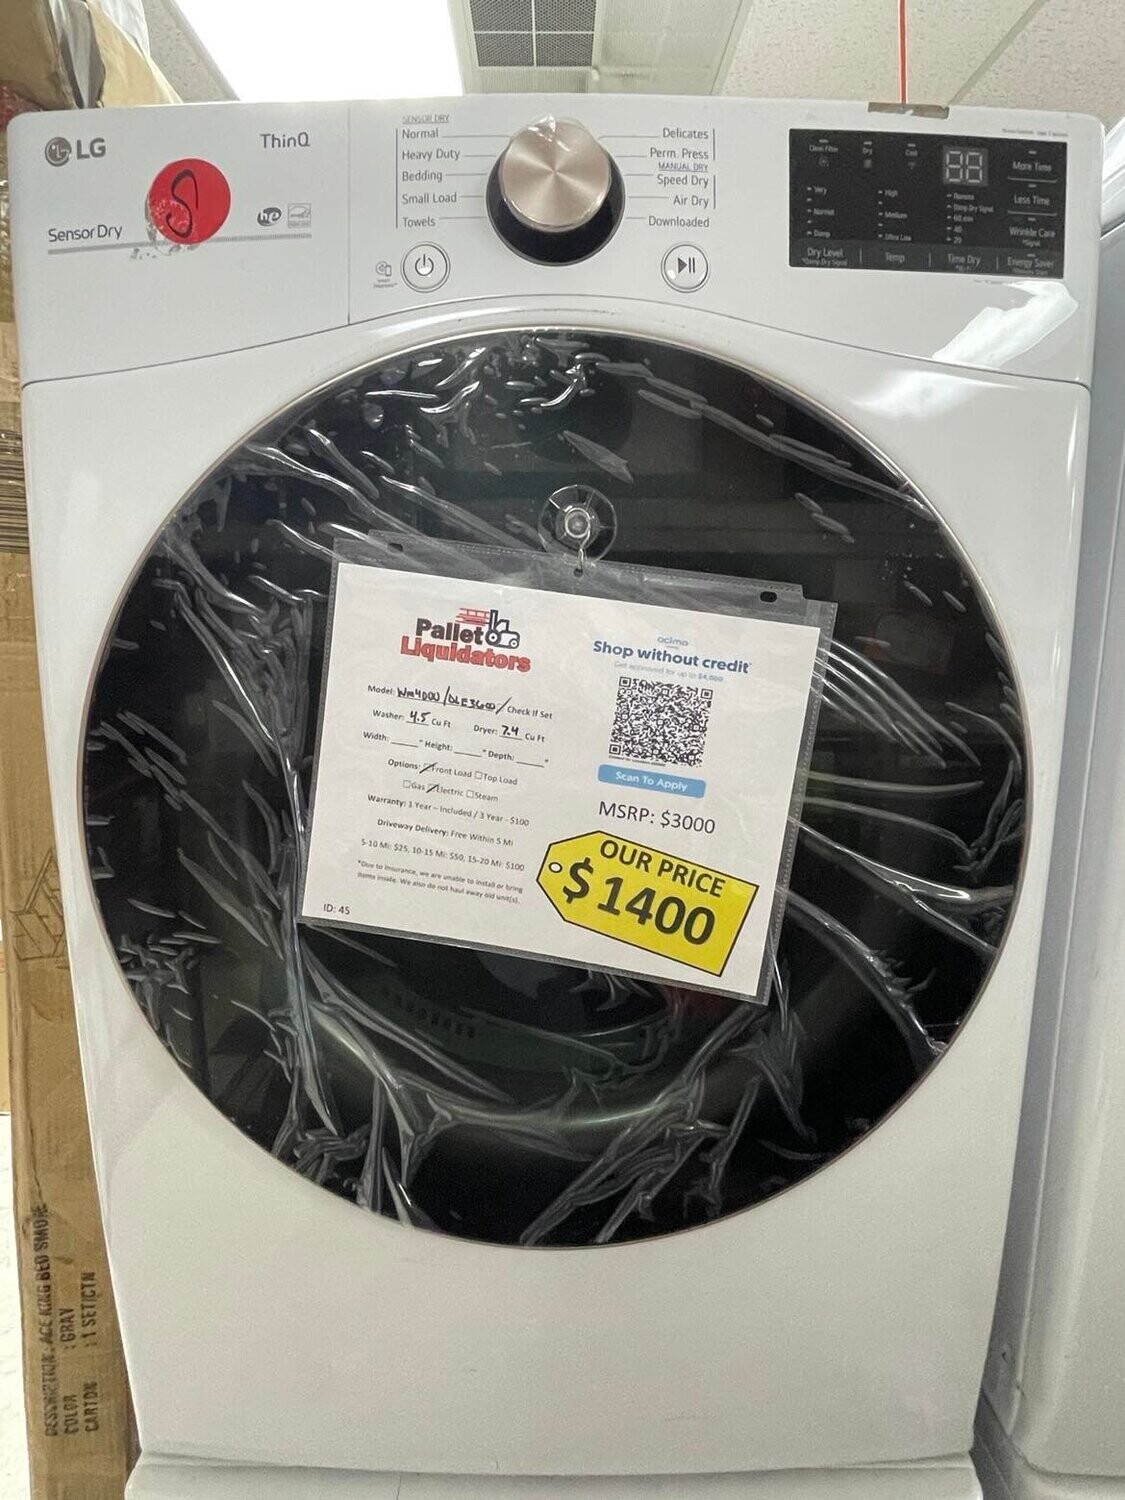 LG Wm4000hwa / DLE3600W Washer & Dryer Set